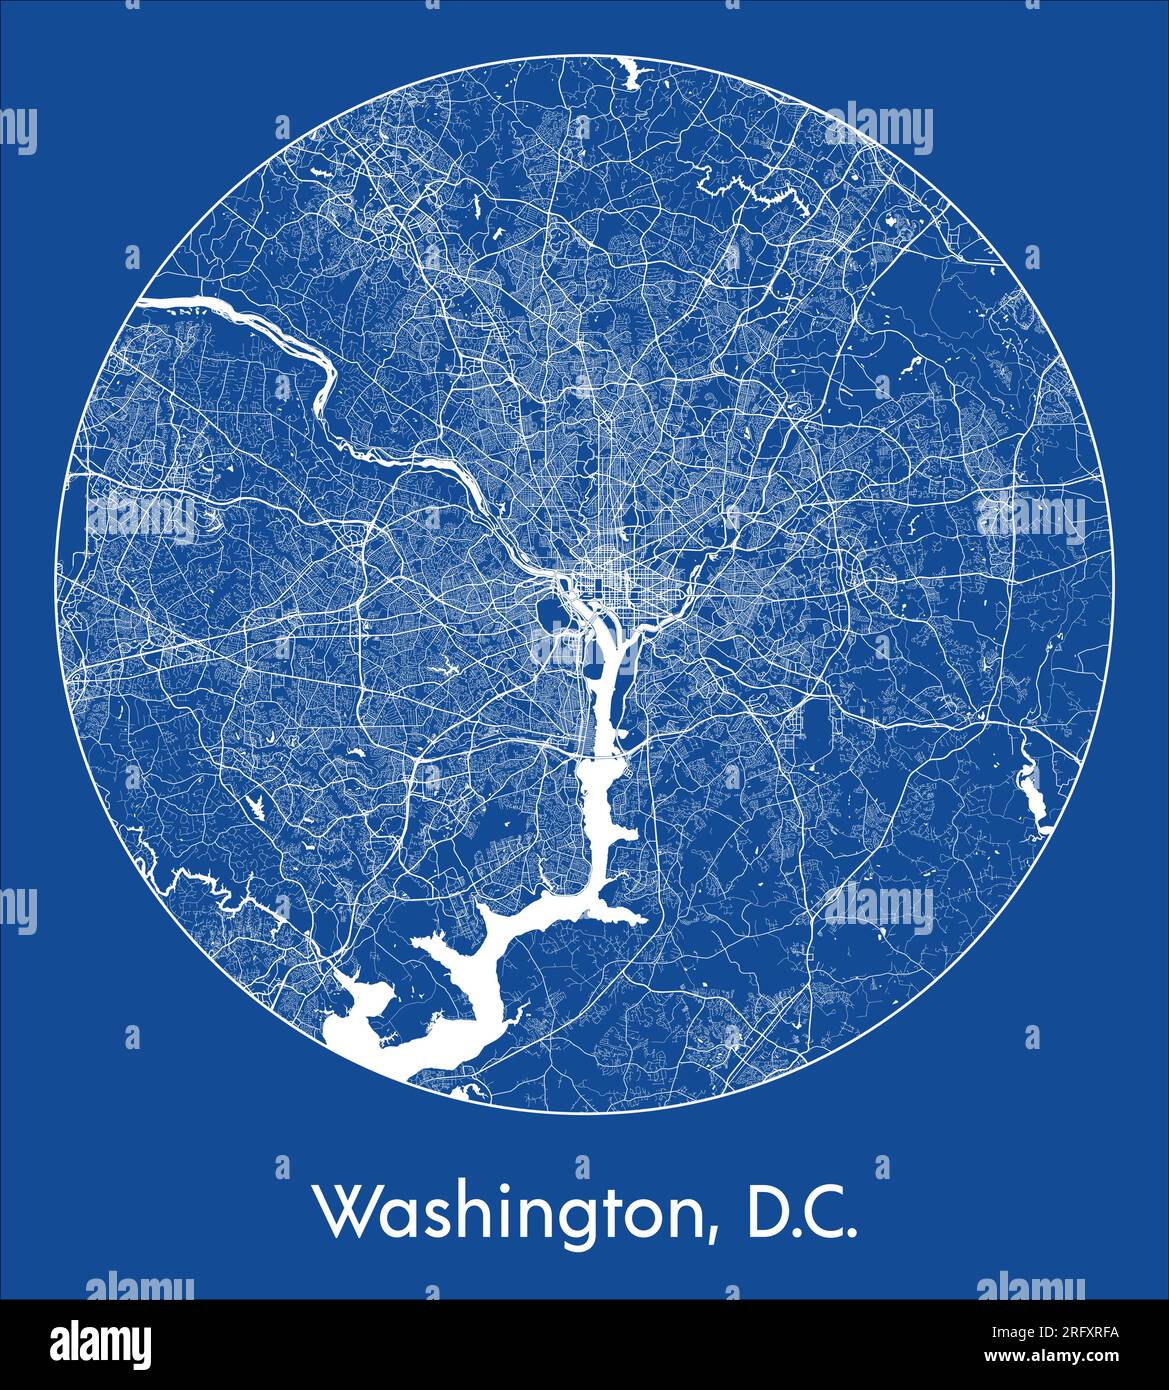 Stadtplan Washington, D.C. Vereinigte Staaten Nordamerika Blaue Darstellung des Kreisvektors Stock Vektor